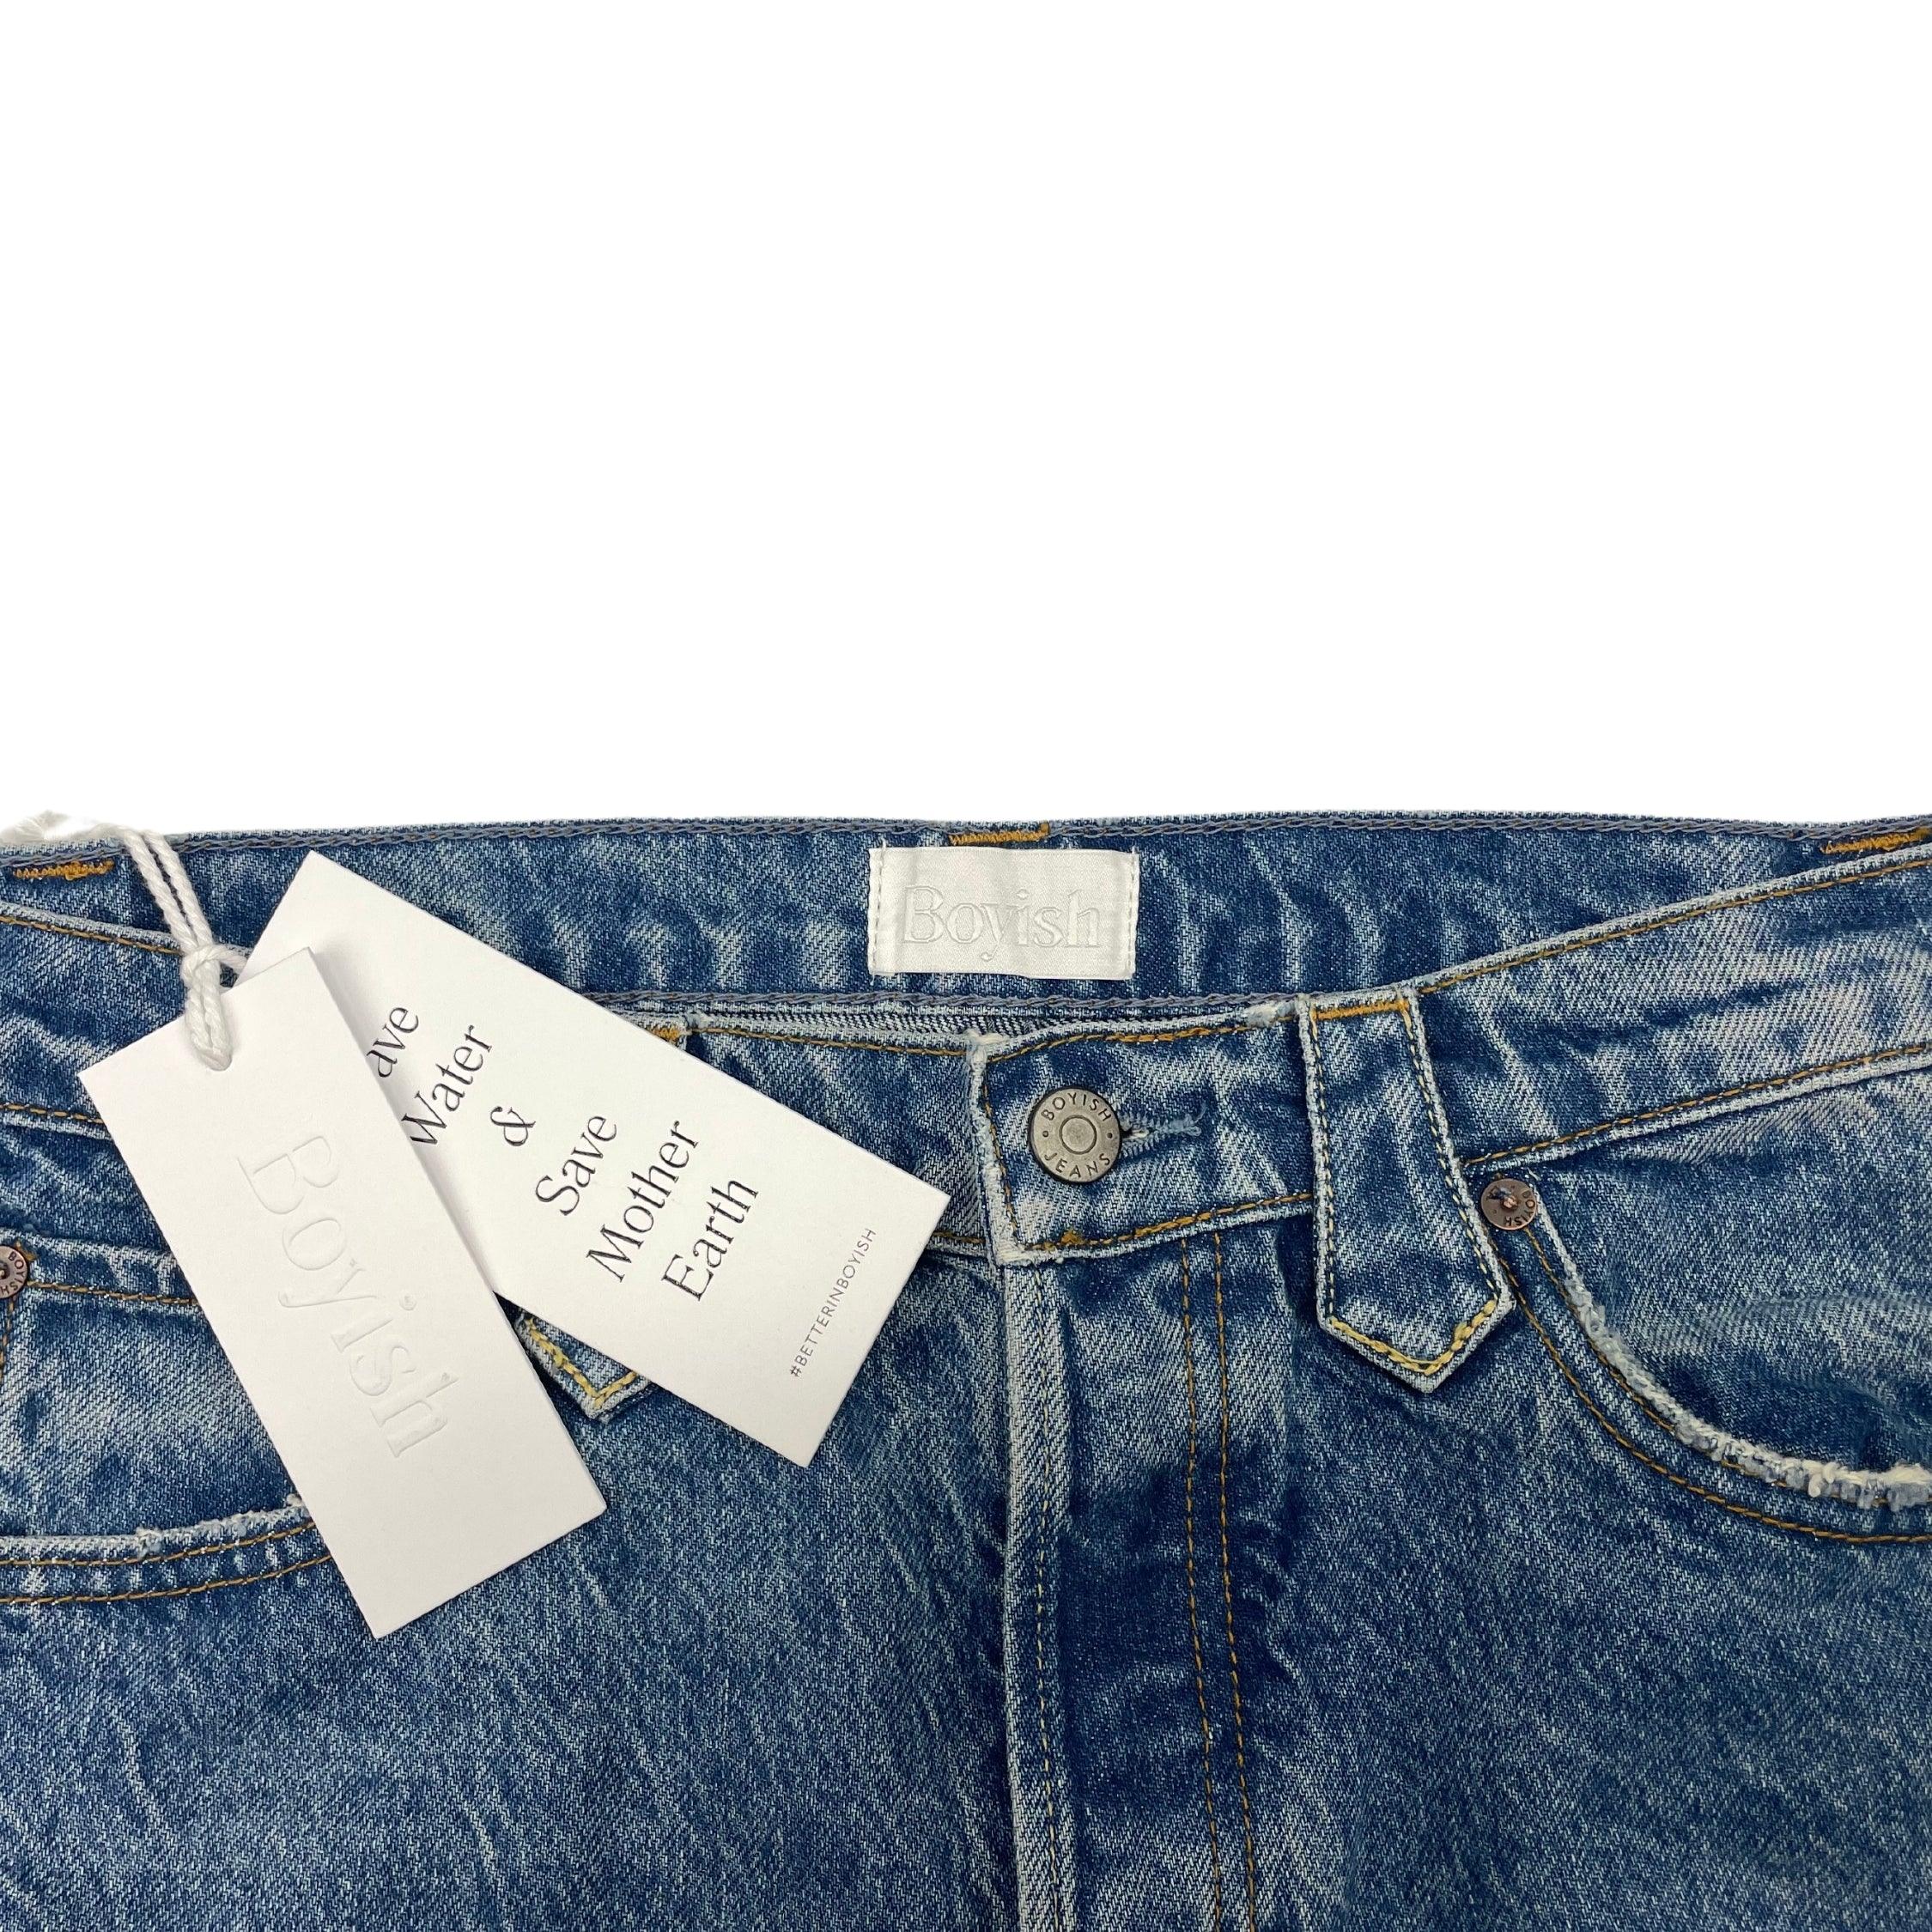 Boyish 'Clint' Jeans - Women's 27 - Fashionably Yours